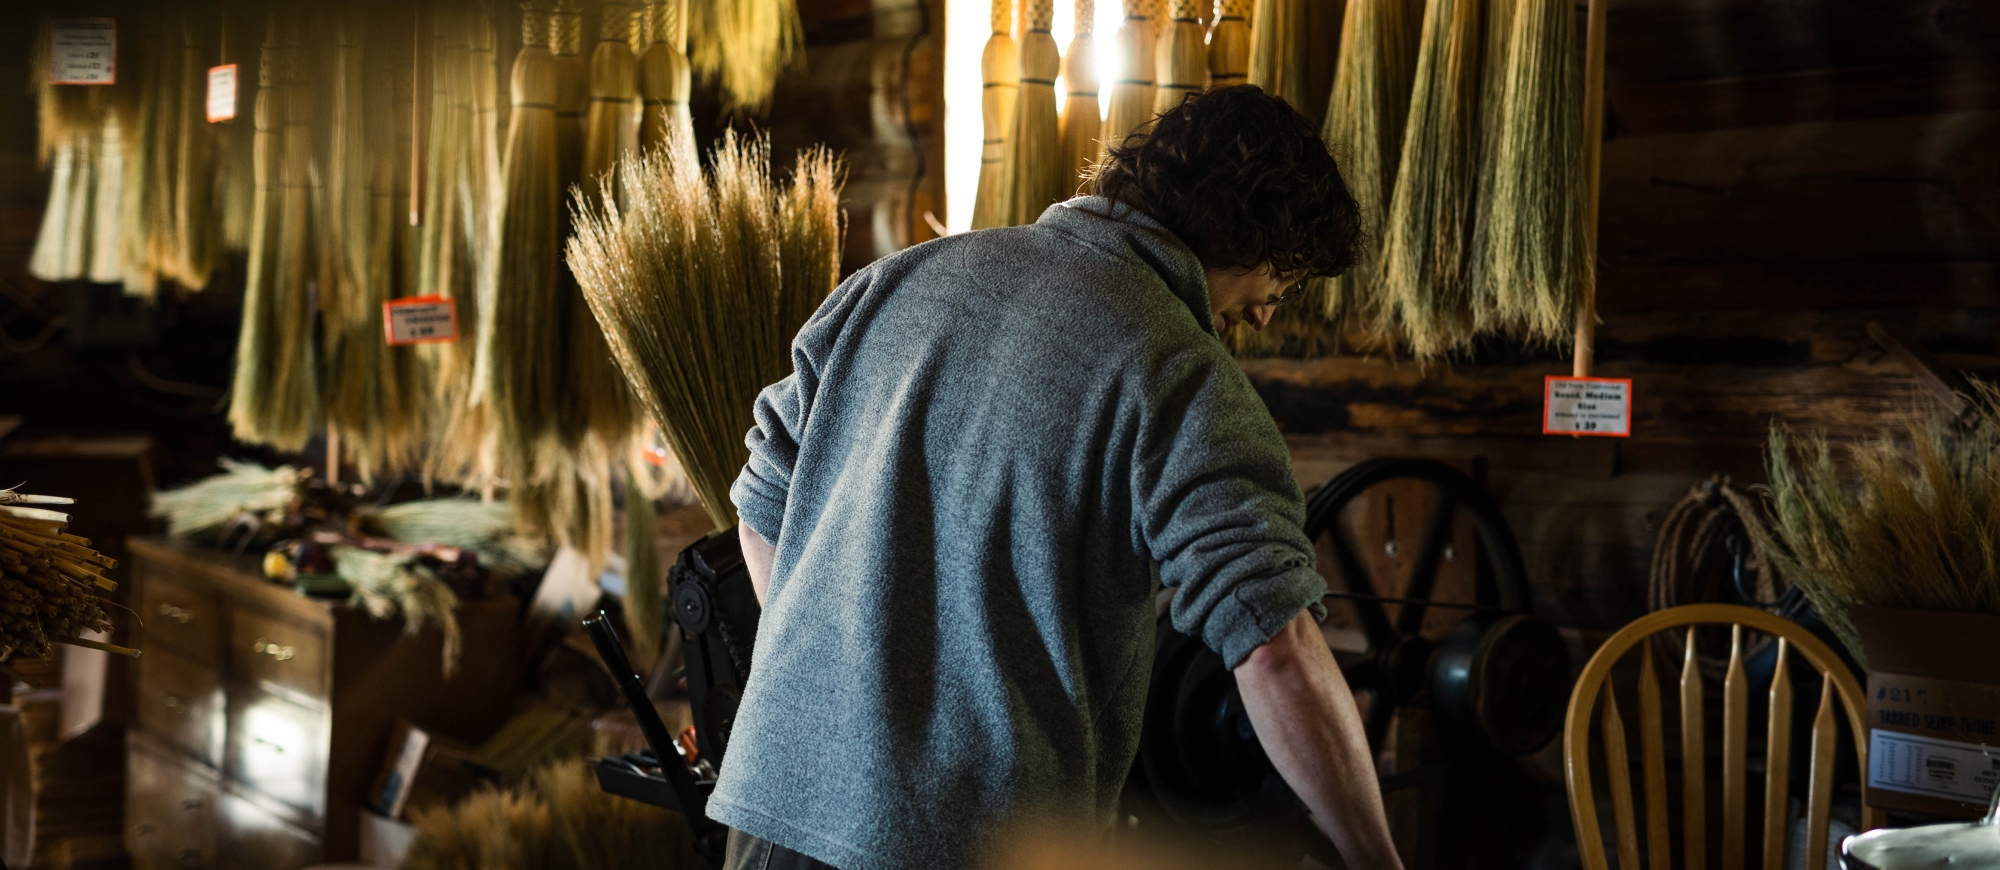 Local broom-maker, Luke, weaving a broom.